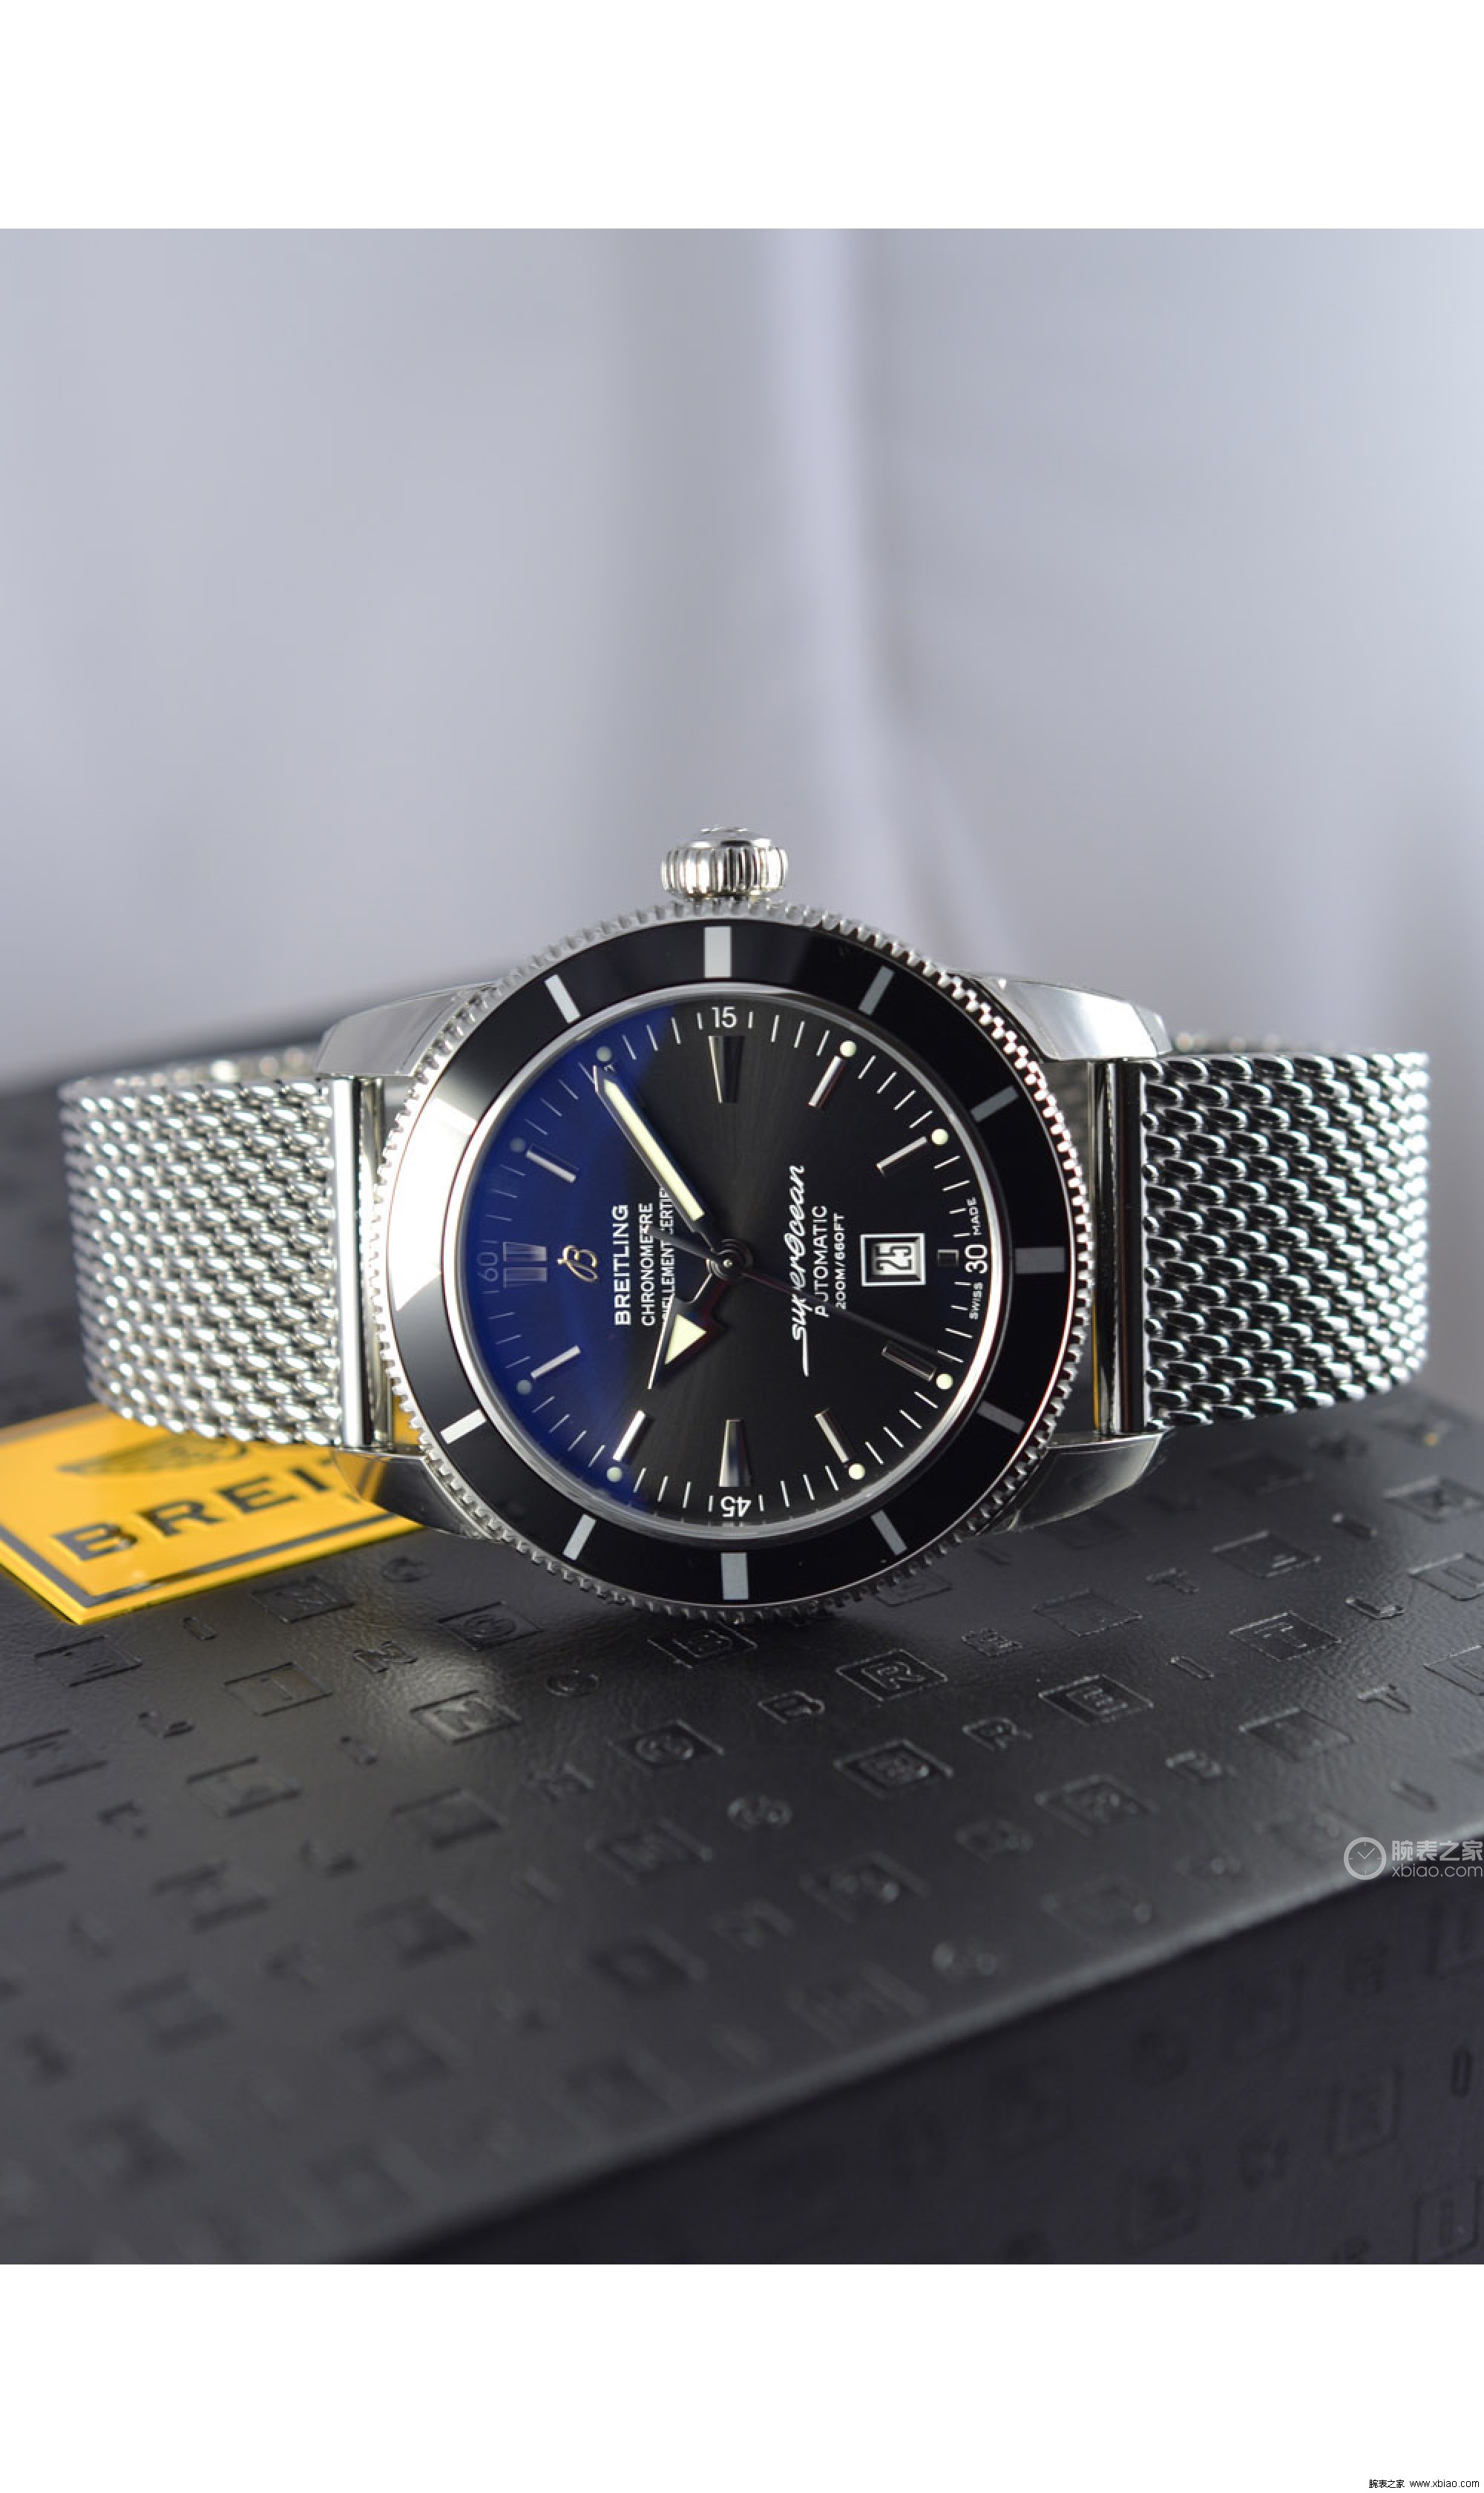 3、 Breitling.1是一款什么样的手表？有图片吗？这是朋友送的礼物。我不知道价格是多少。请专家指教